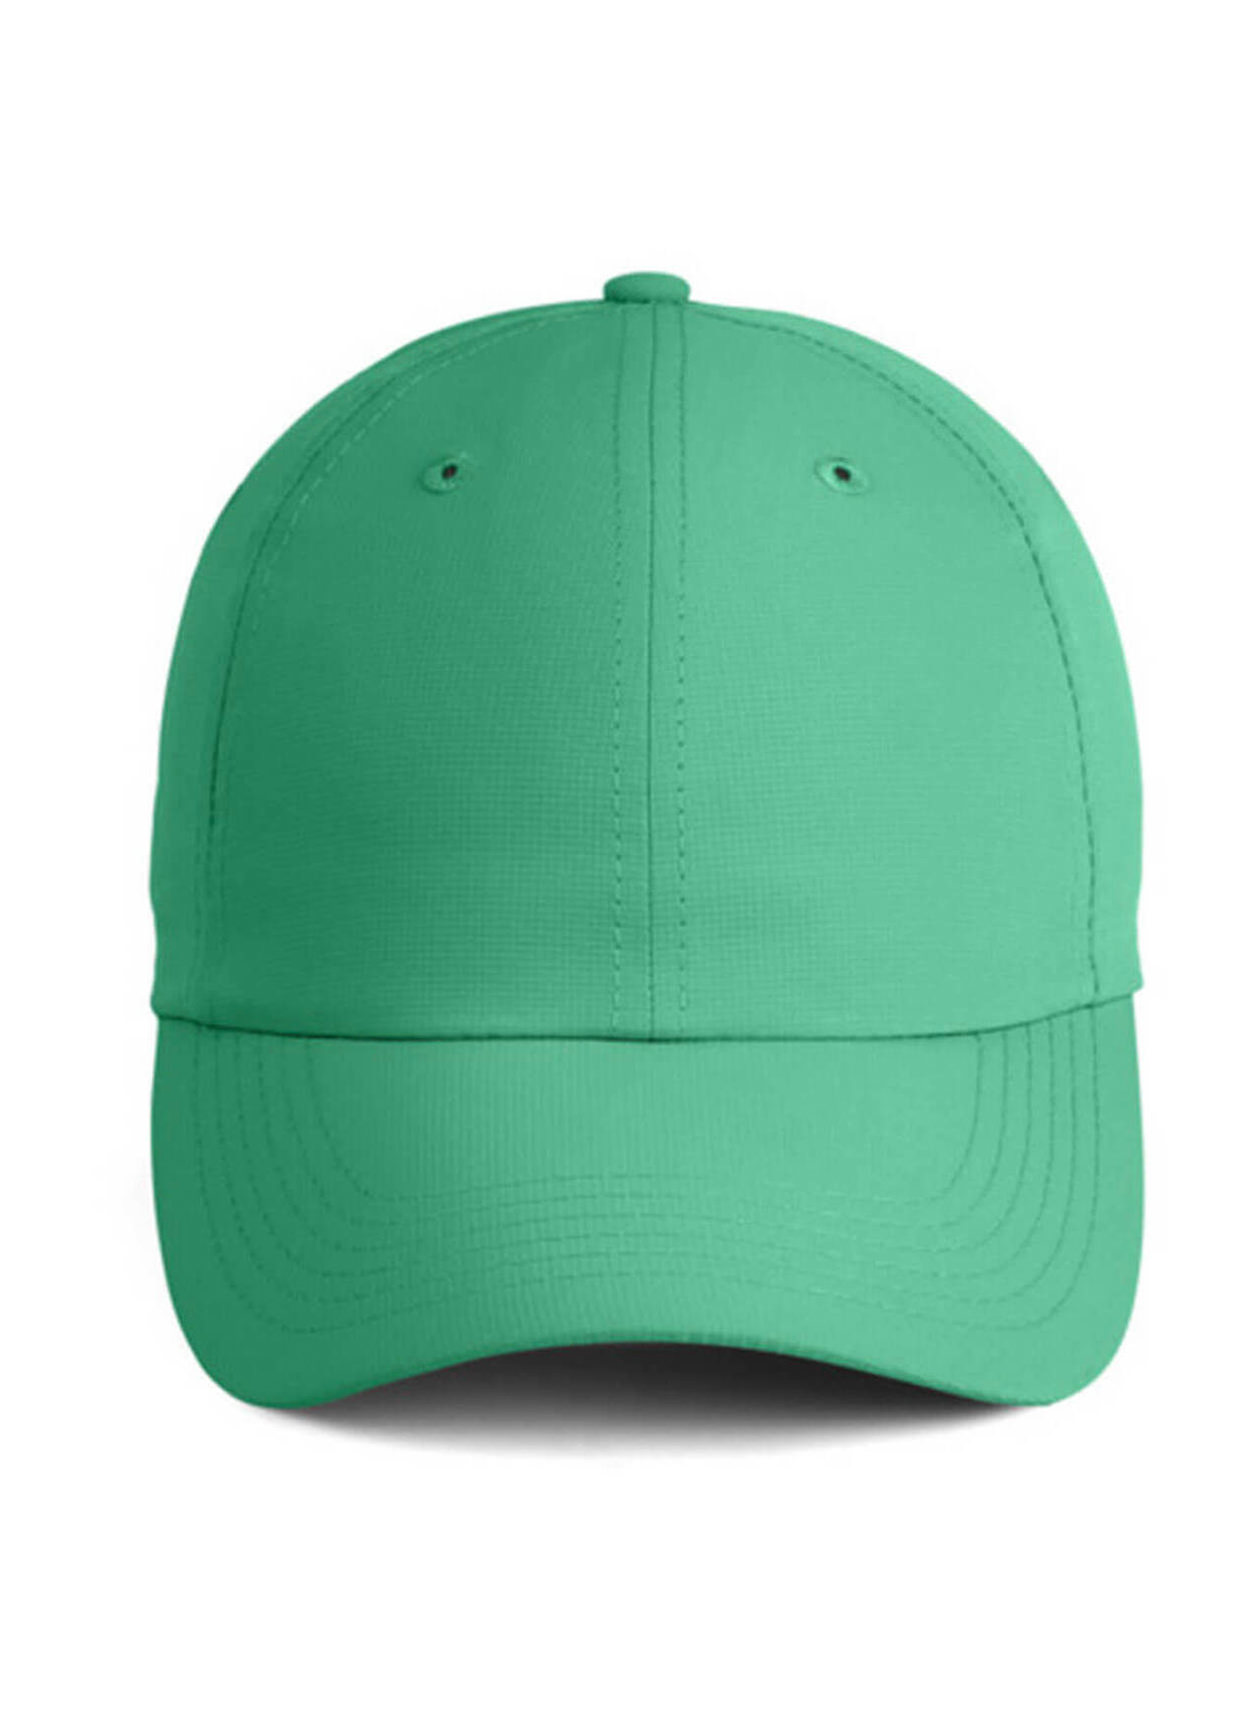 Imperial Green Original Performance Hat